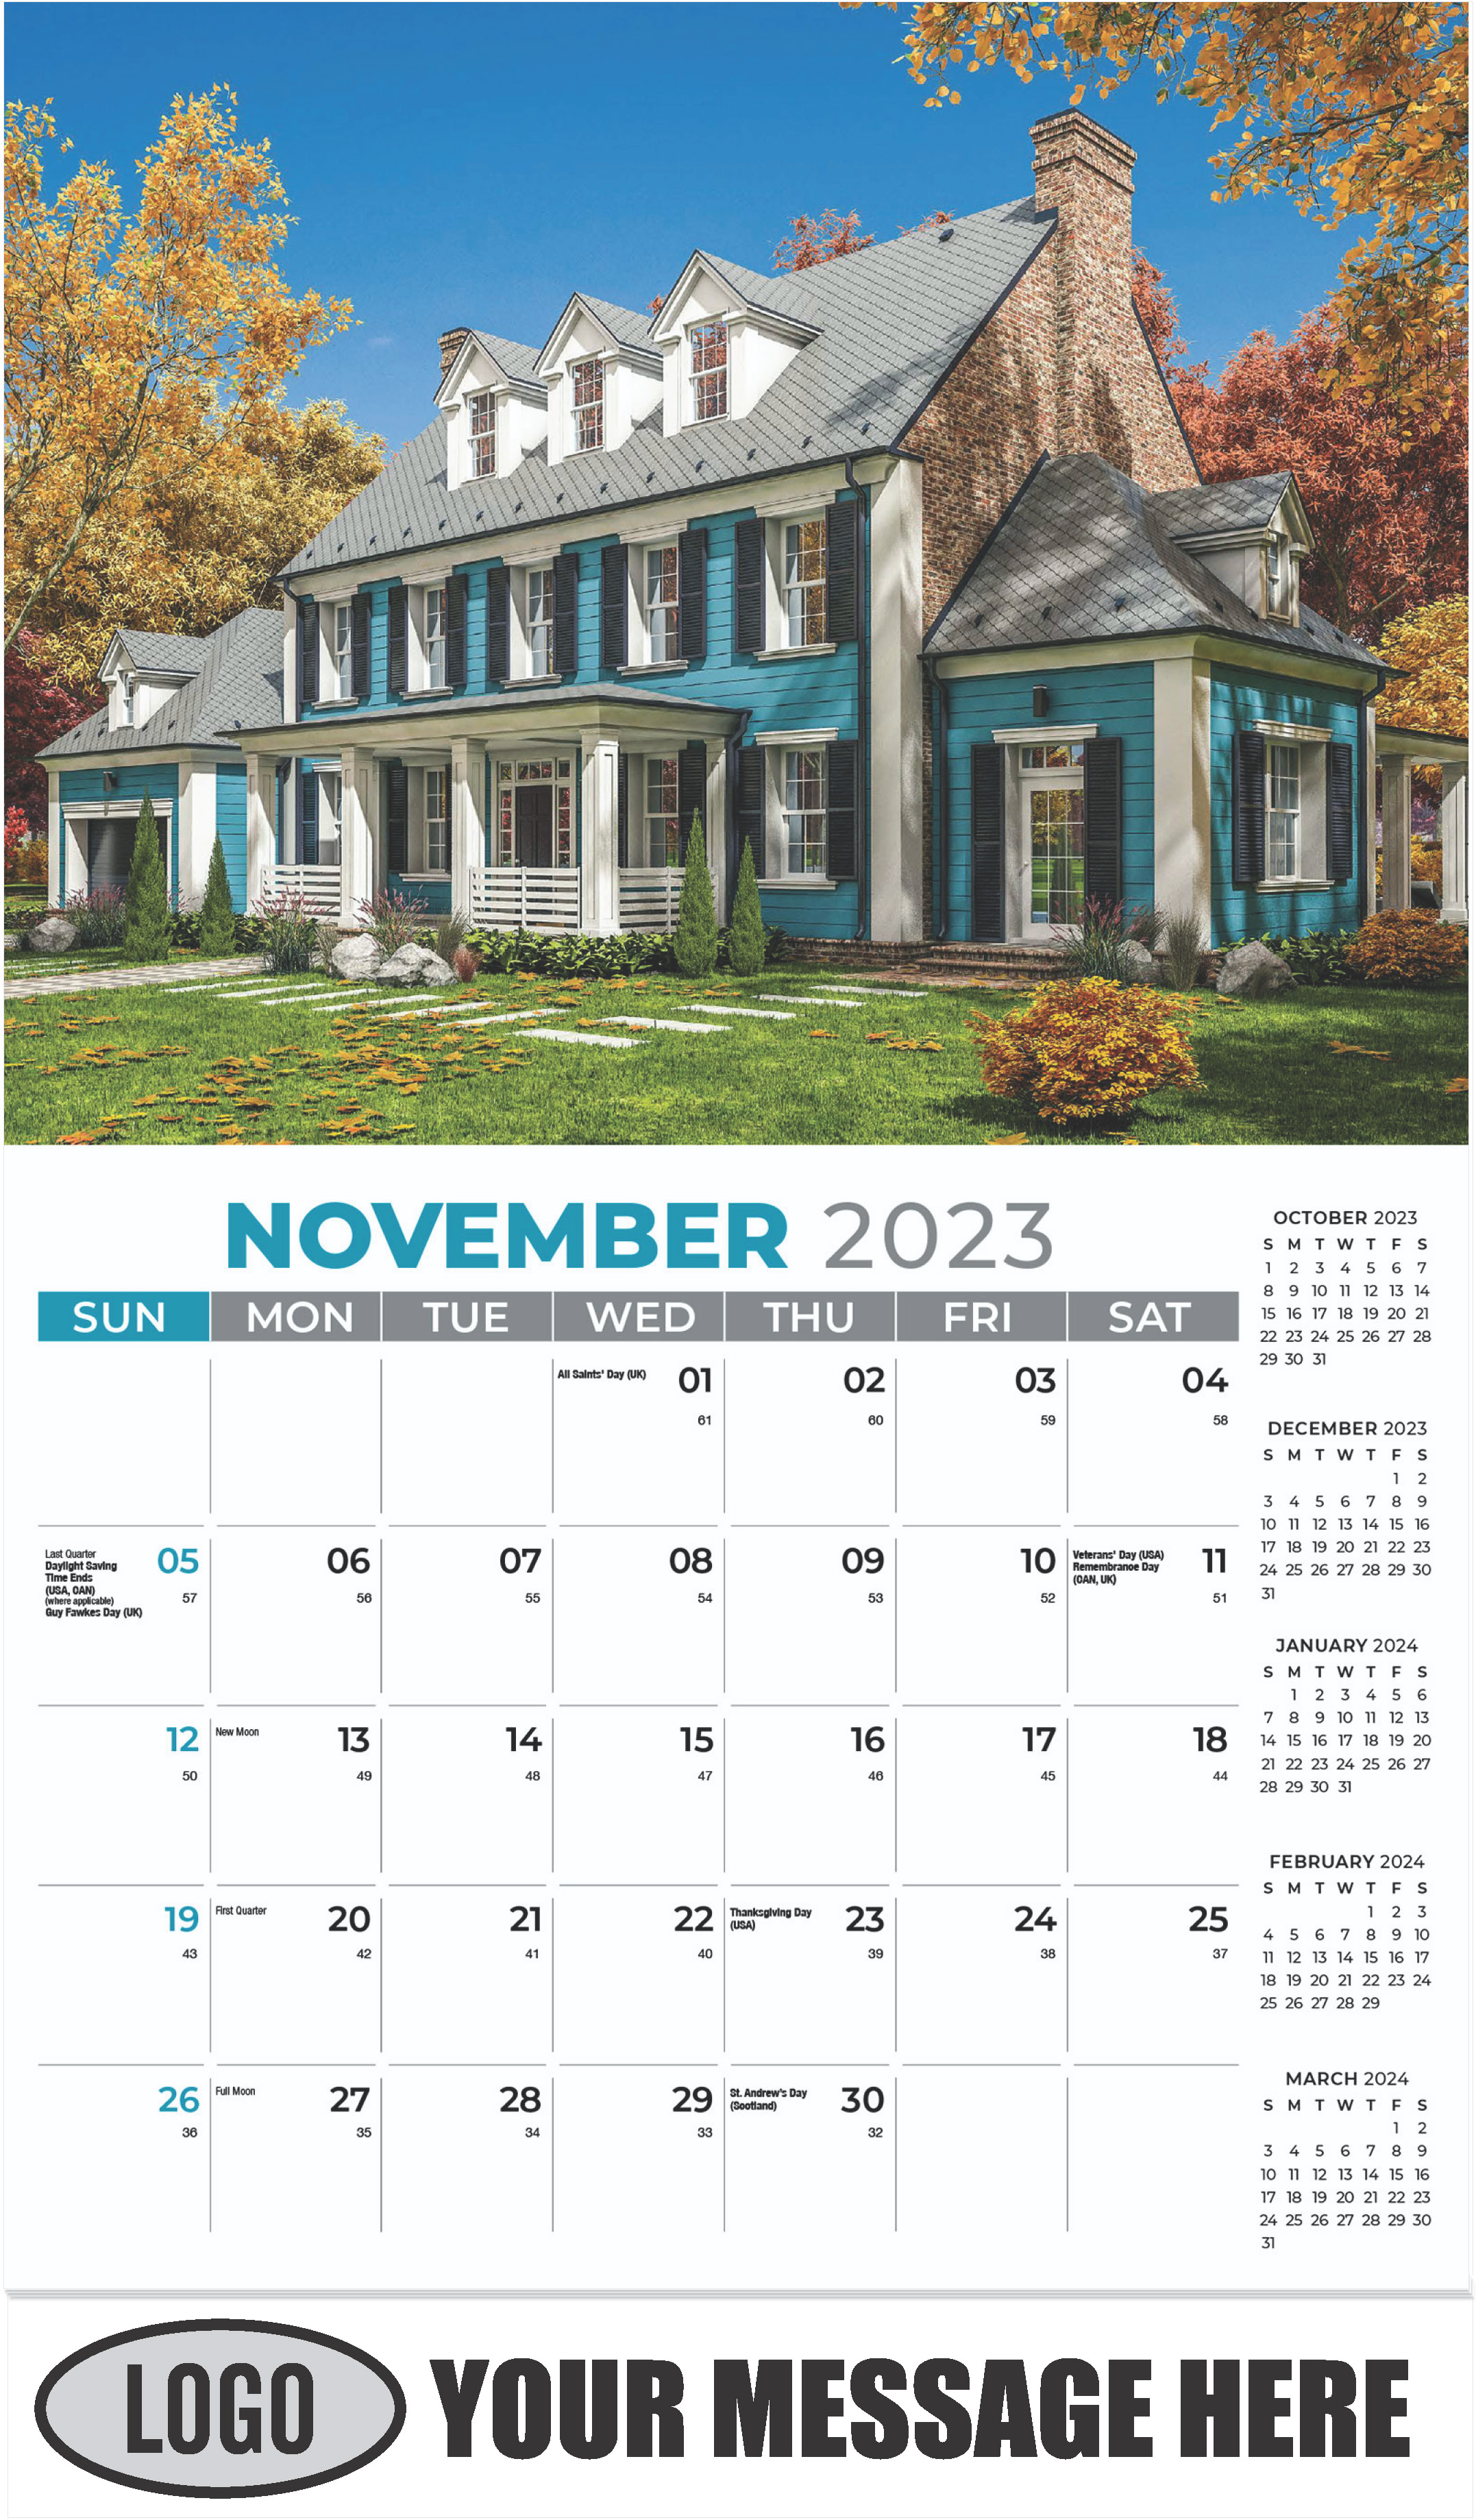 Luxury Homes Calendar - November - Homes 2023 Promotional Calendar